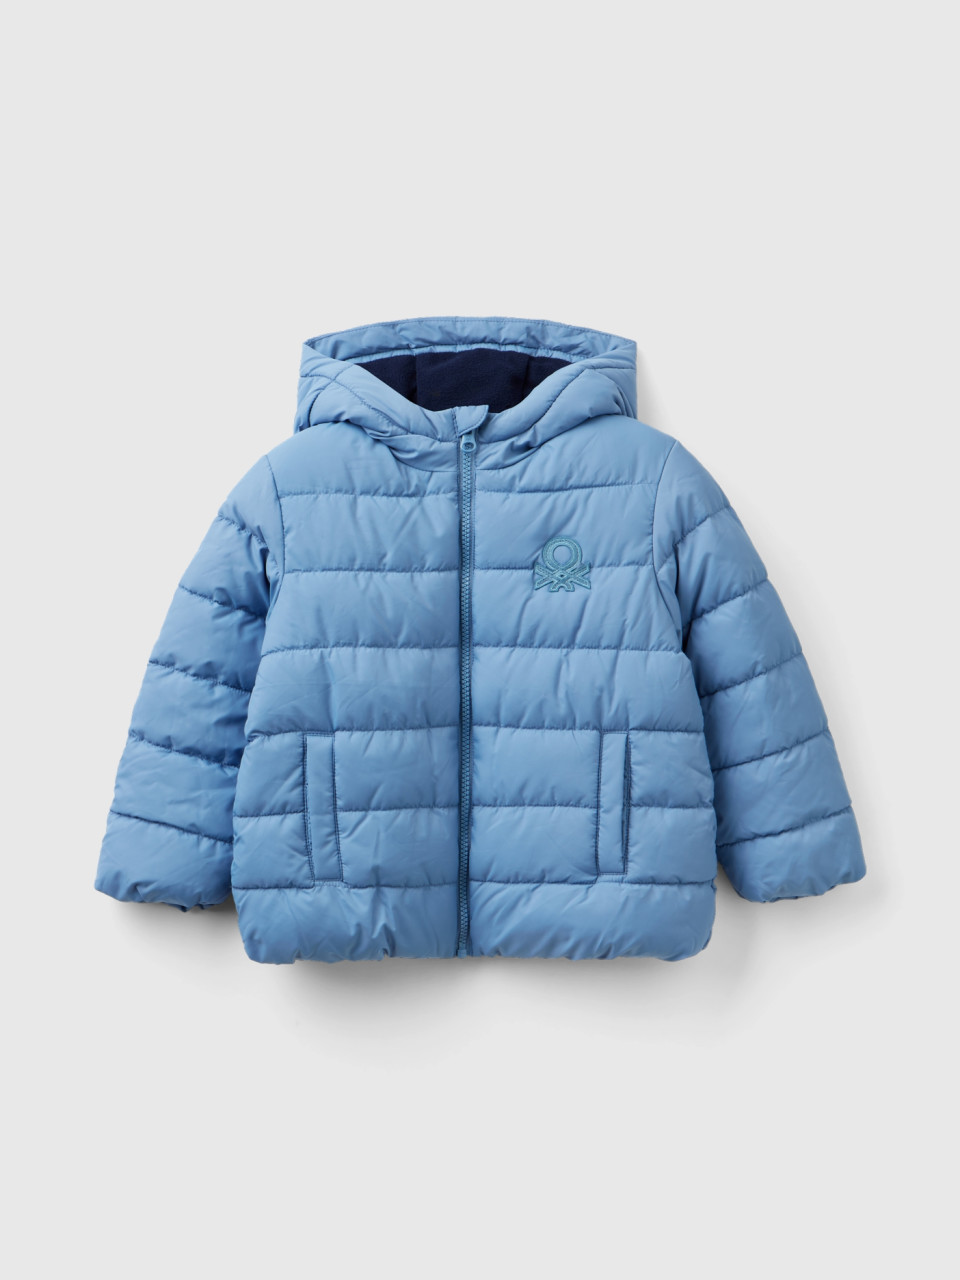 Benetton, Puffer Jacket With Hood And Logo, Light Blue, Kids